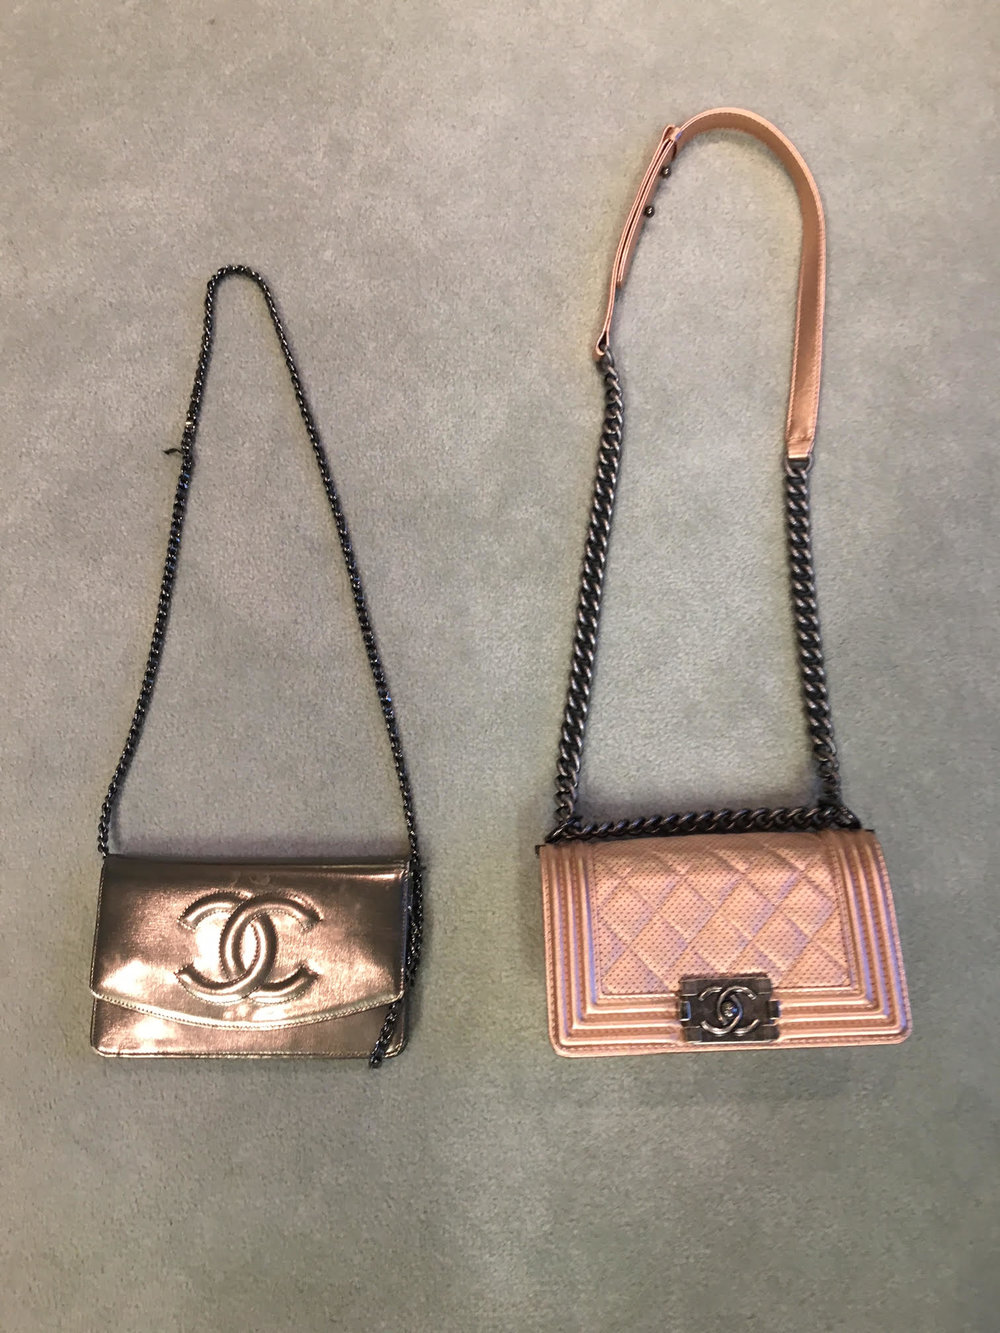 Cross-body purses are a favorite of Honey Good when choosing a purse 